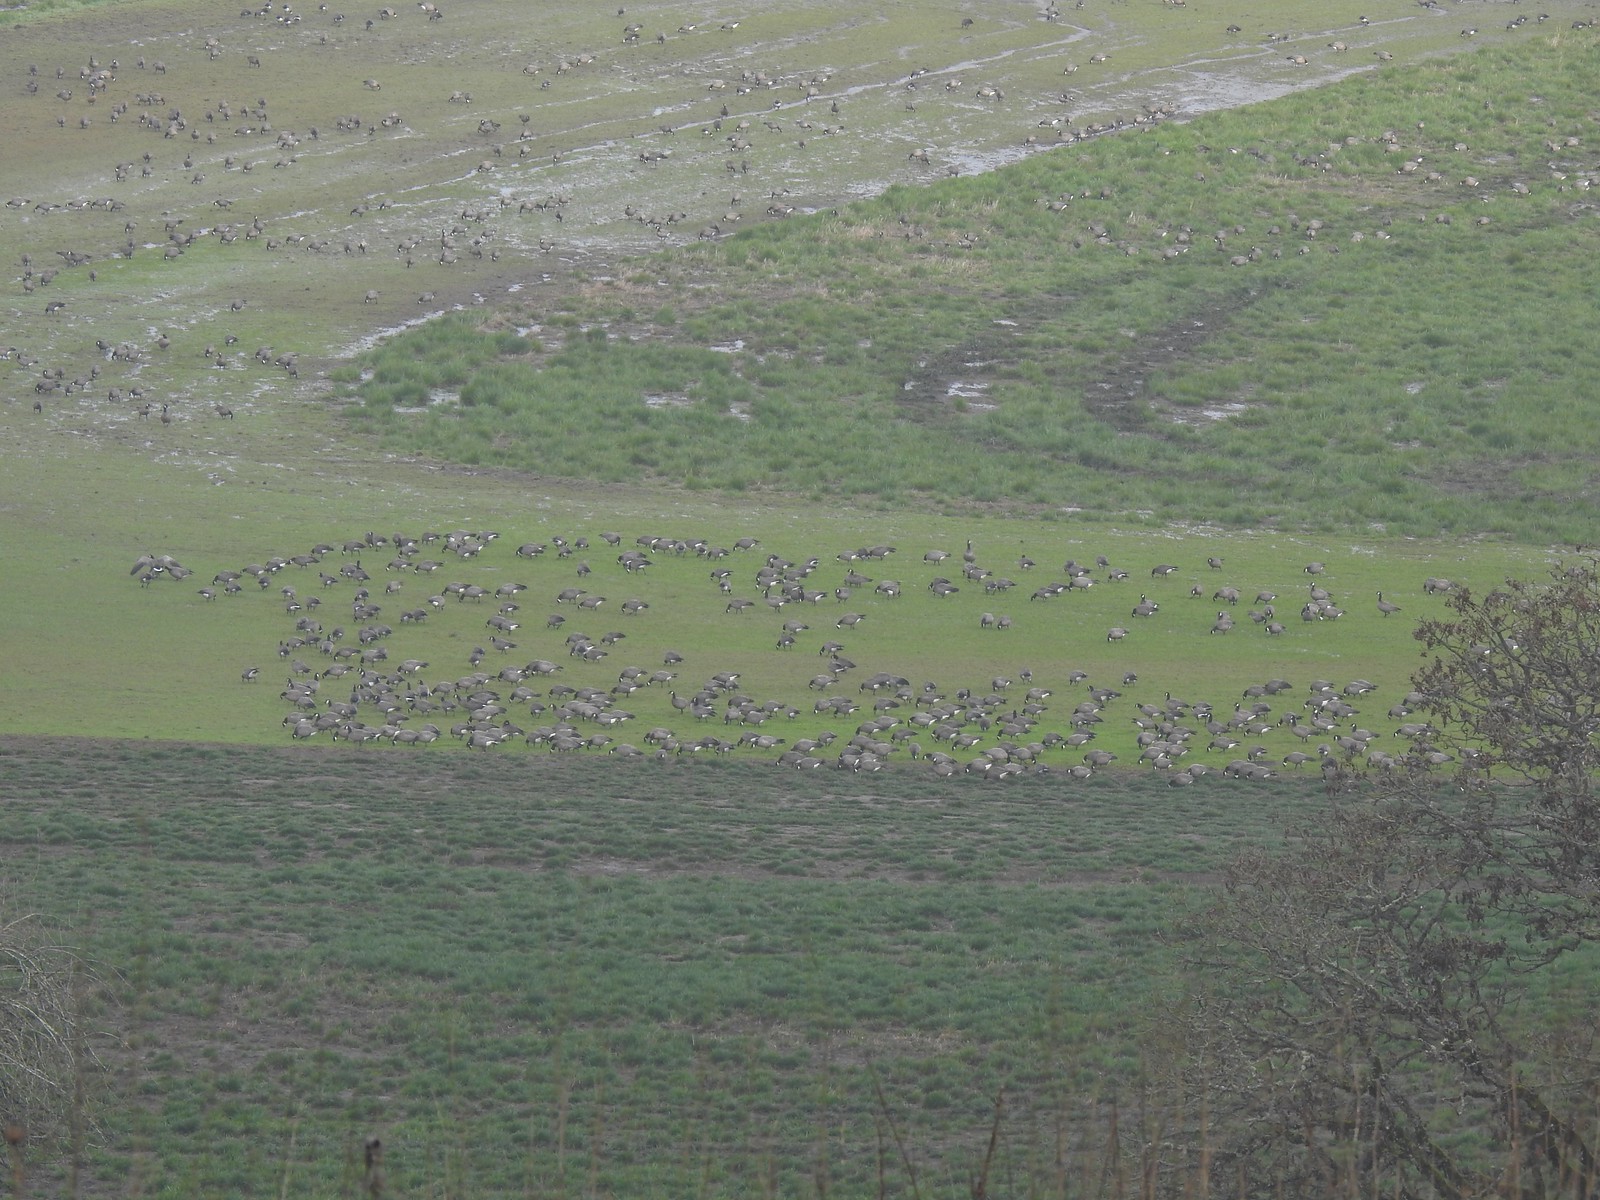 Lots of geese